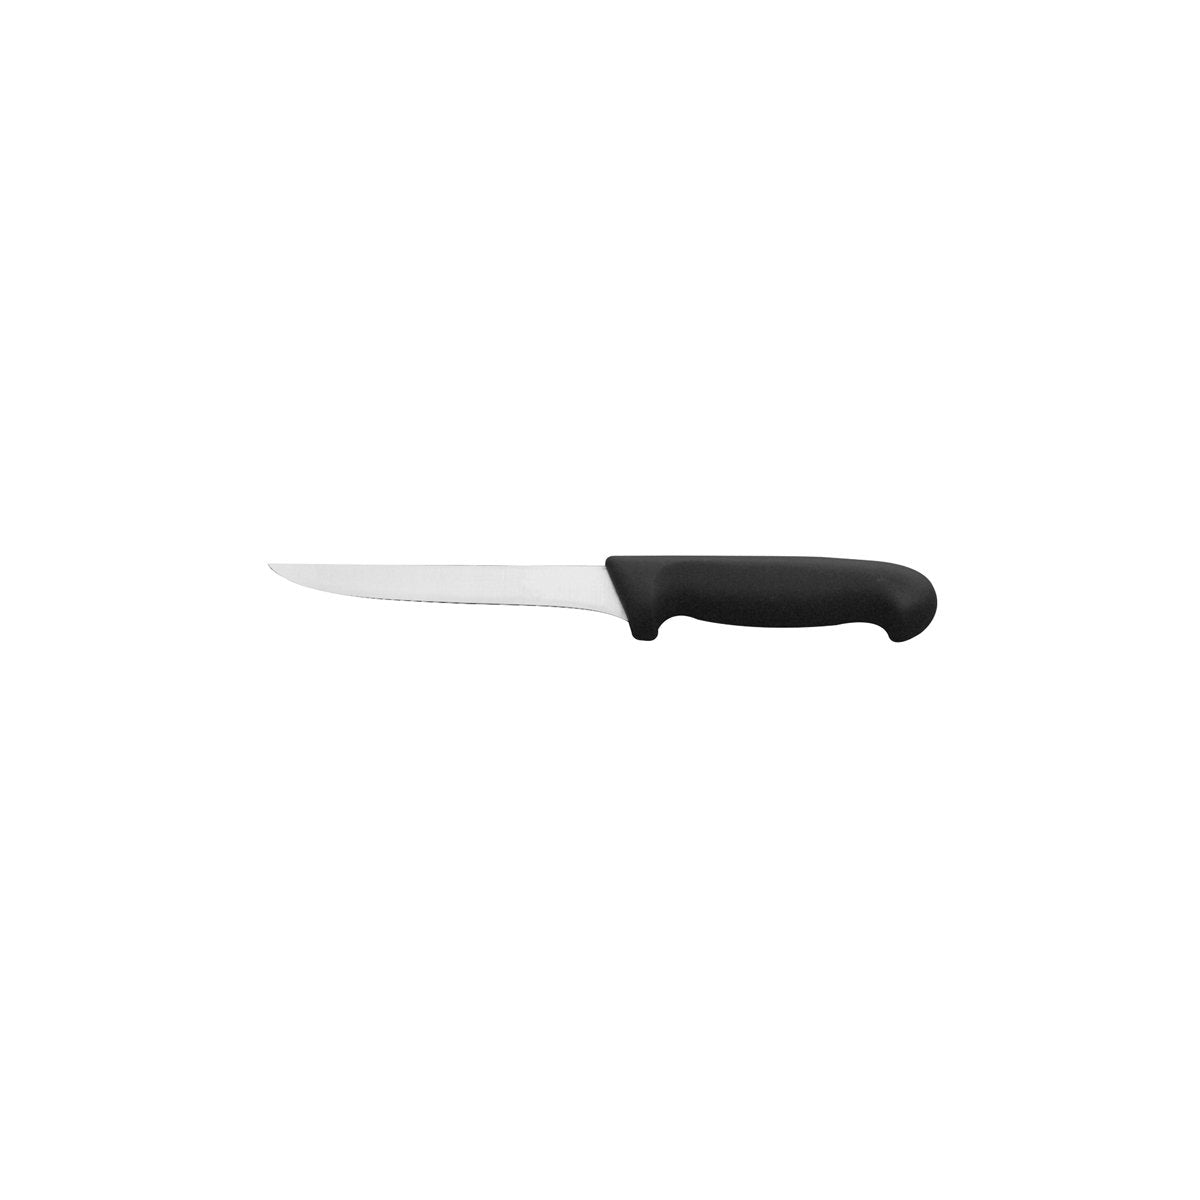 25006 Ivo Professional 55000 Boning Knife 150mm Tomkin Australia Hospitality Supplies